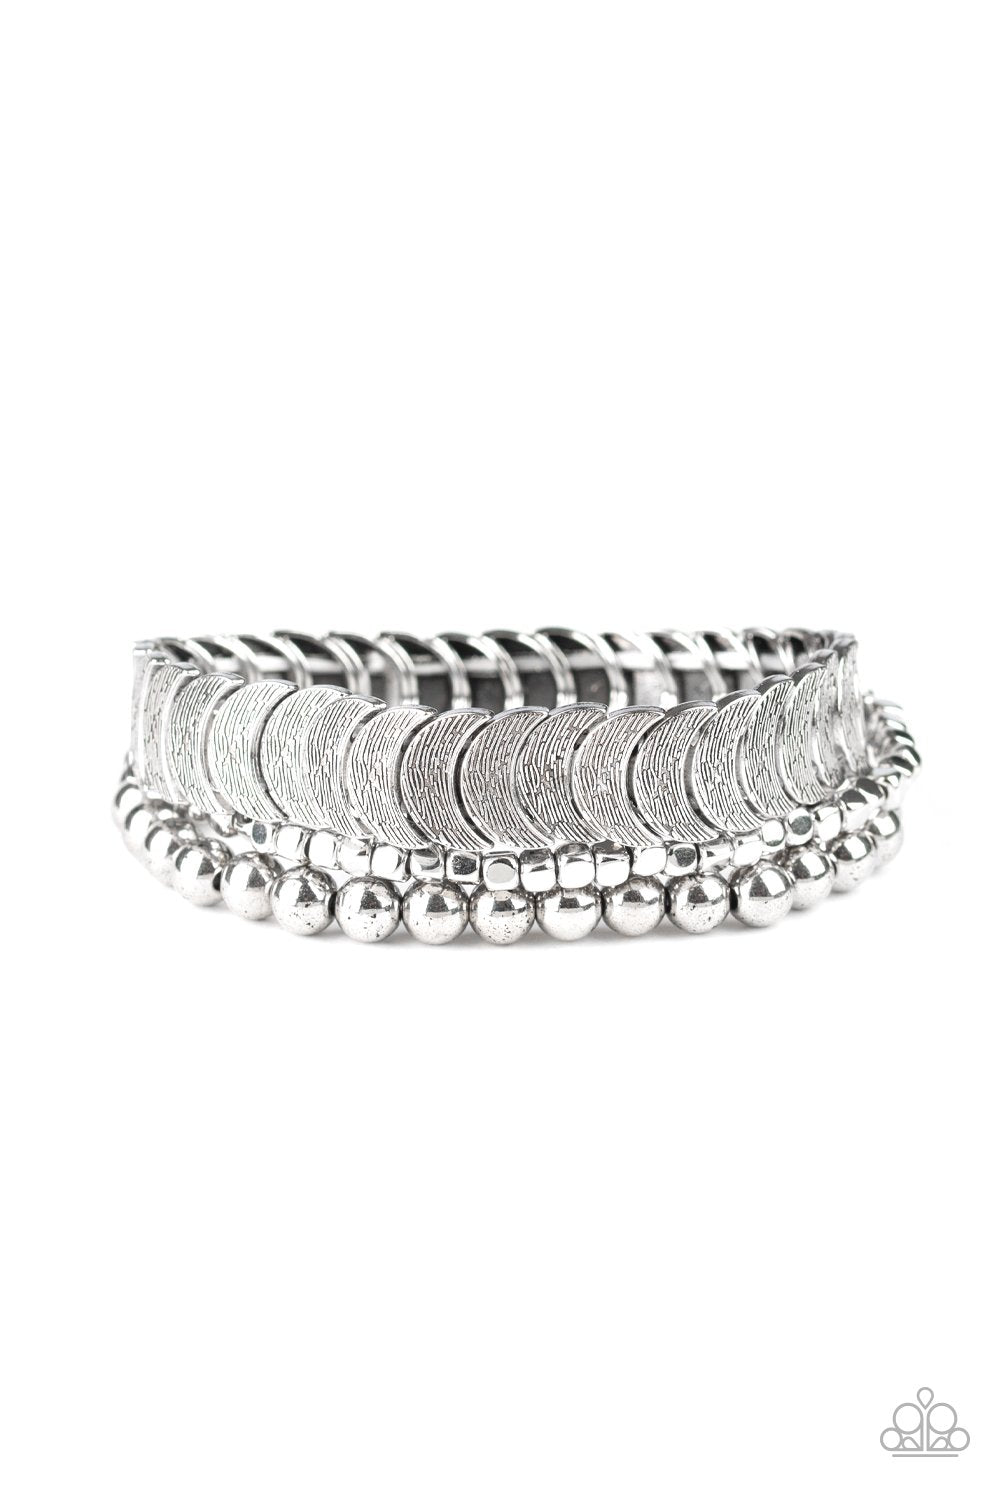 LAYER It On Me Silver Stretch Bracelet Set - Paparazzi Accessories-CarasShop.com - $5 Jewelry by Cara Jewels